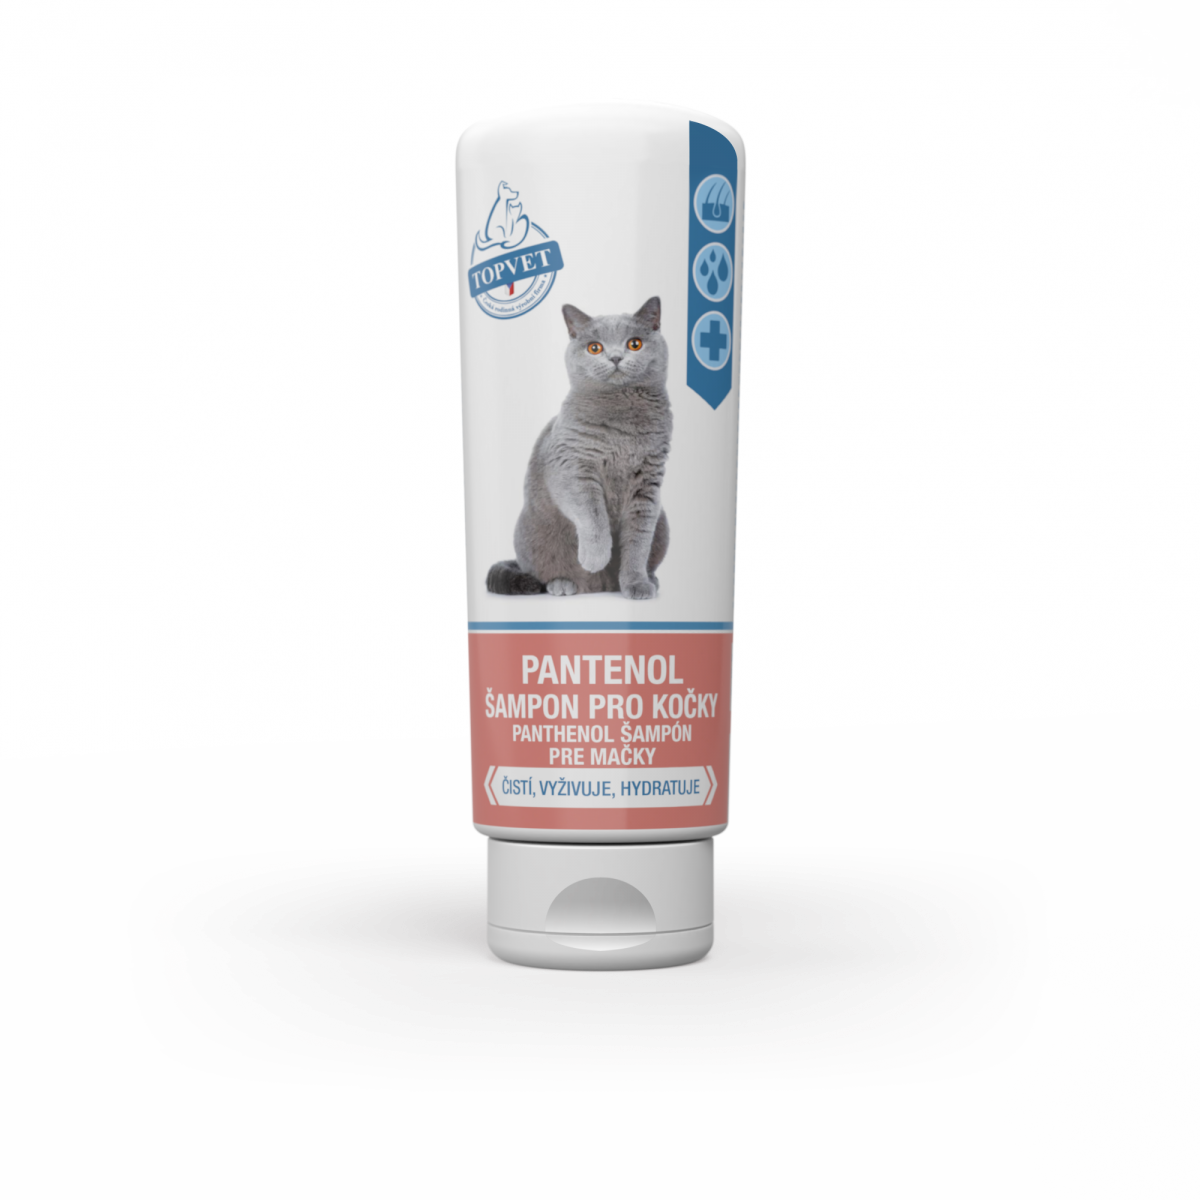 Panthenol shampoo for cats